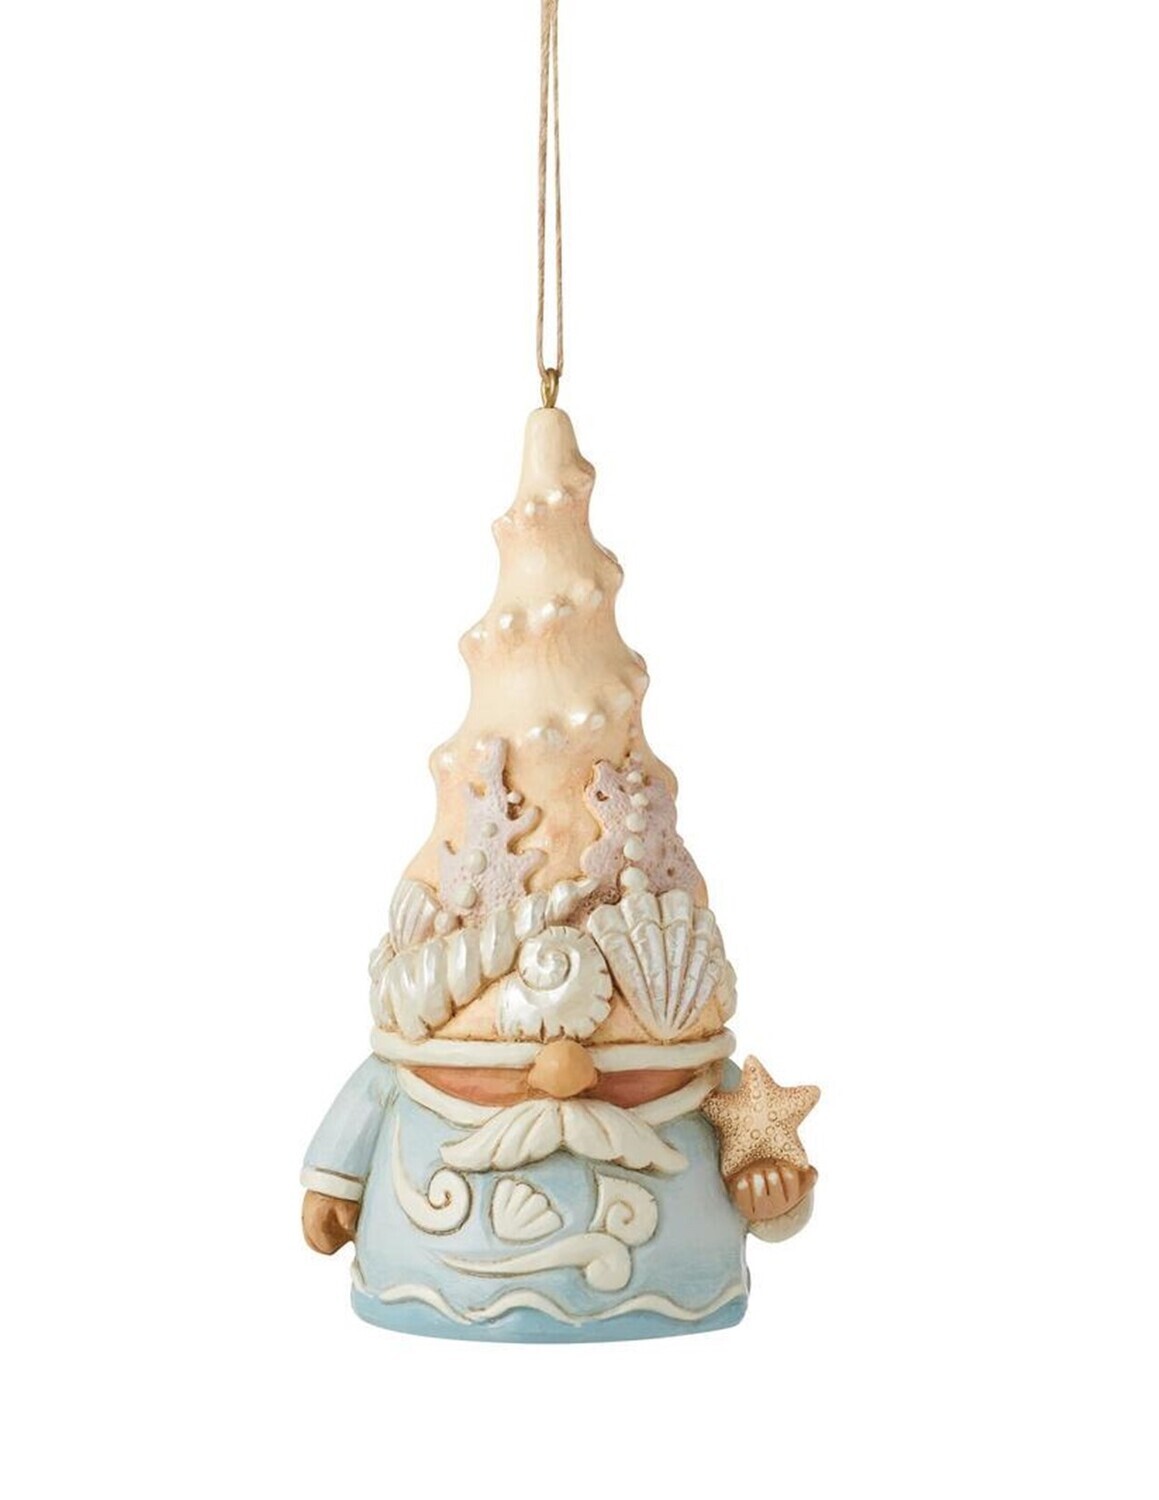 Jim Shore Heartwood Creek "Coastal Gnome" Ornament (6010811)